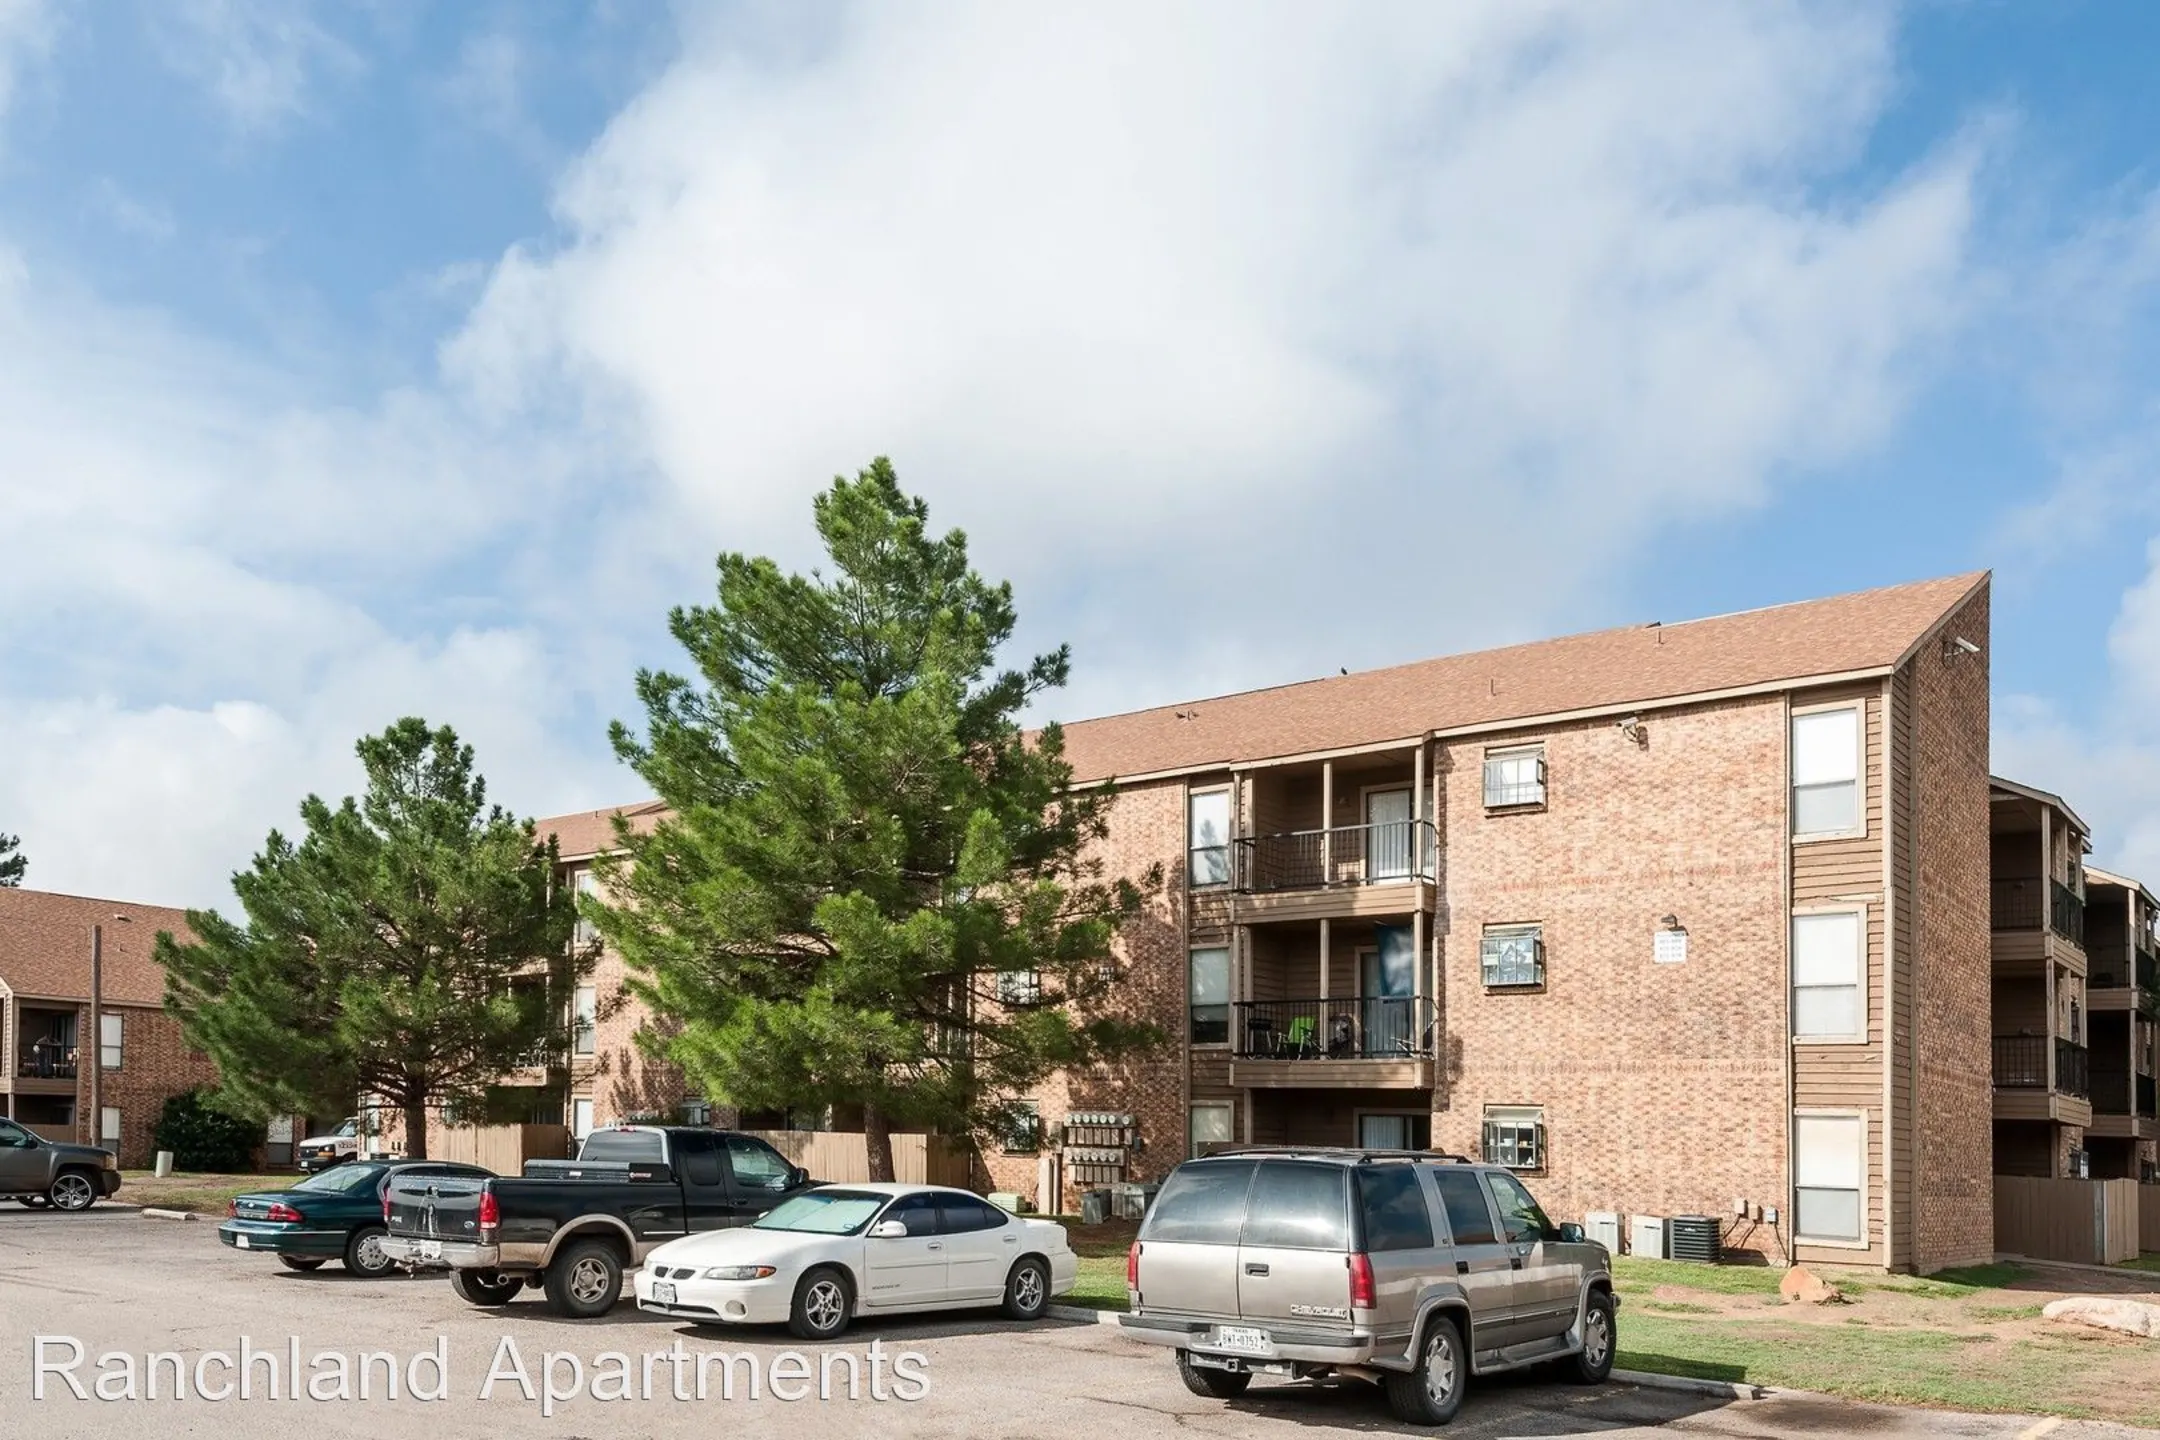 Building - Ranchland Apartments - Midland, TX